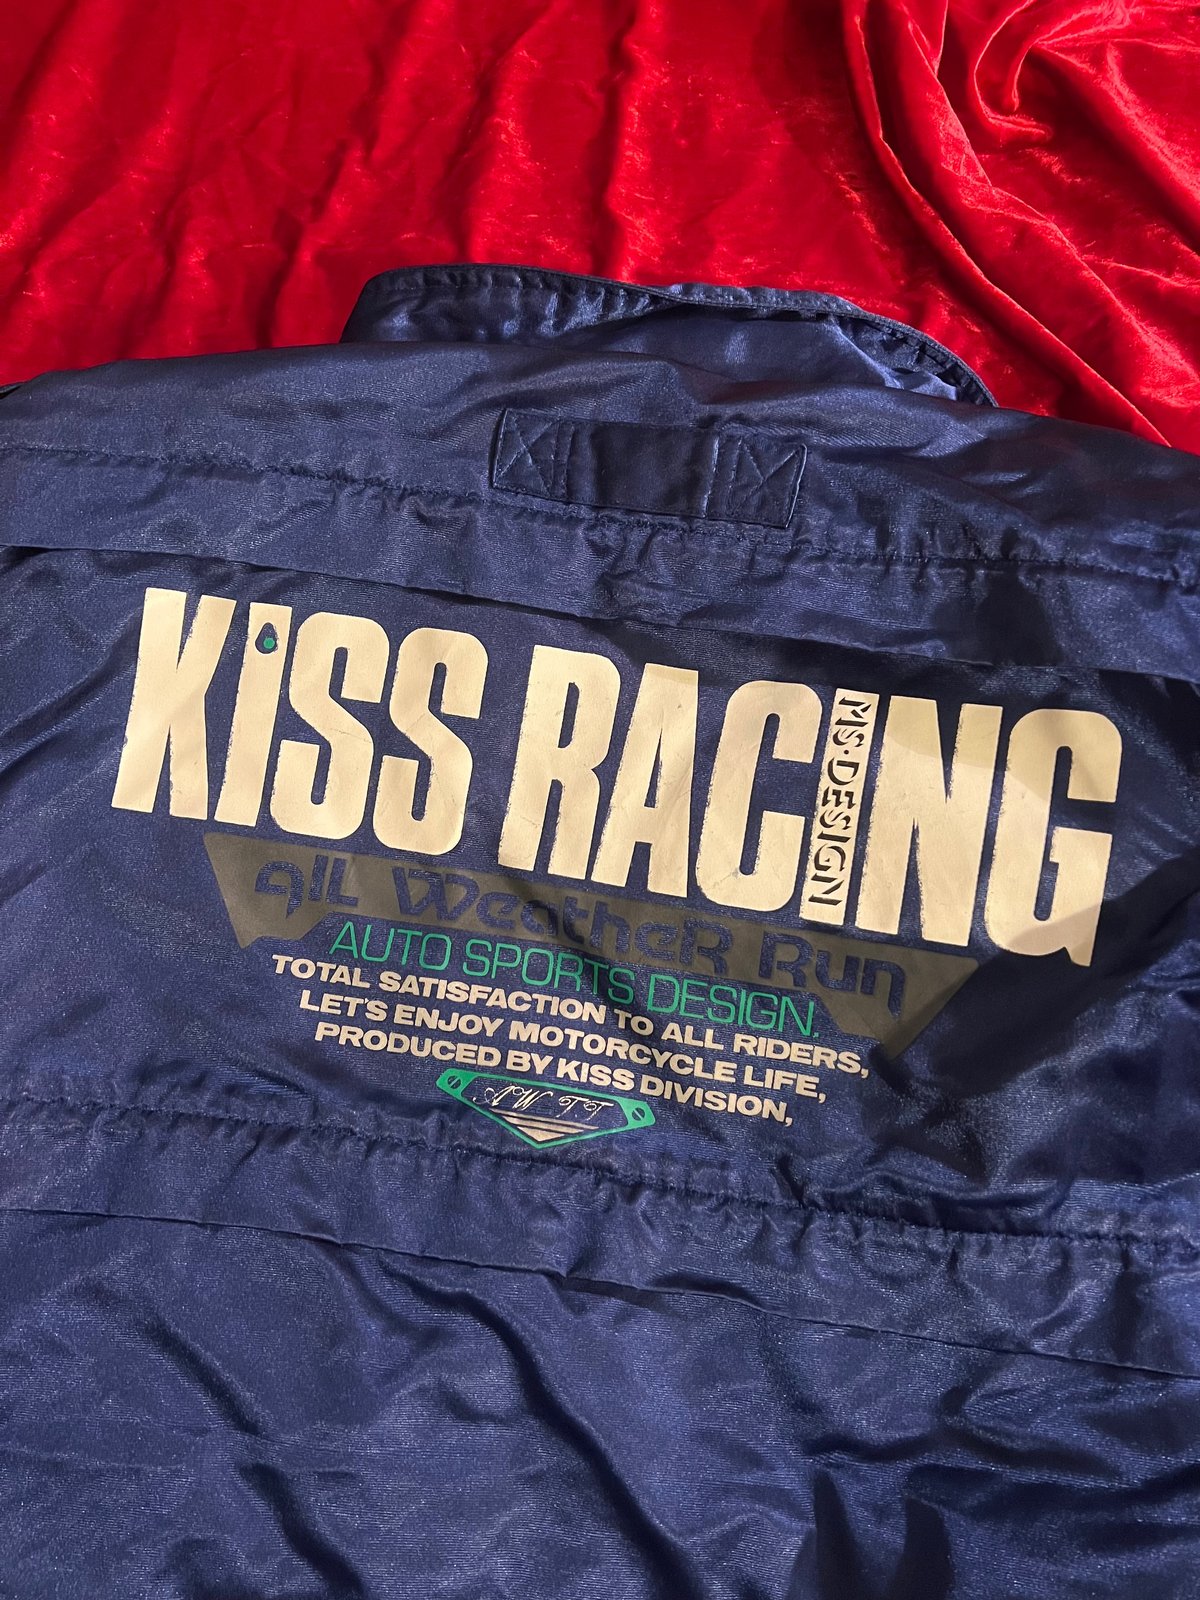 Kiss Racing motorcycle jacket | Annoying Team Racing!